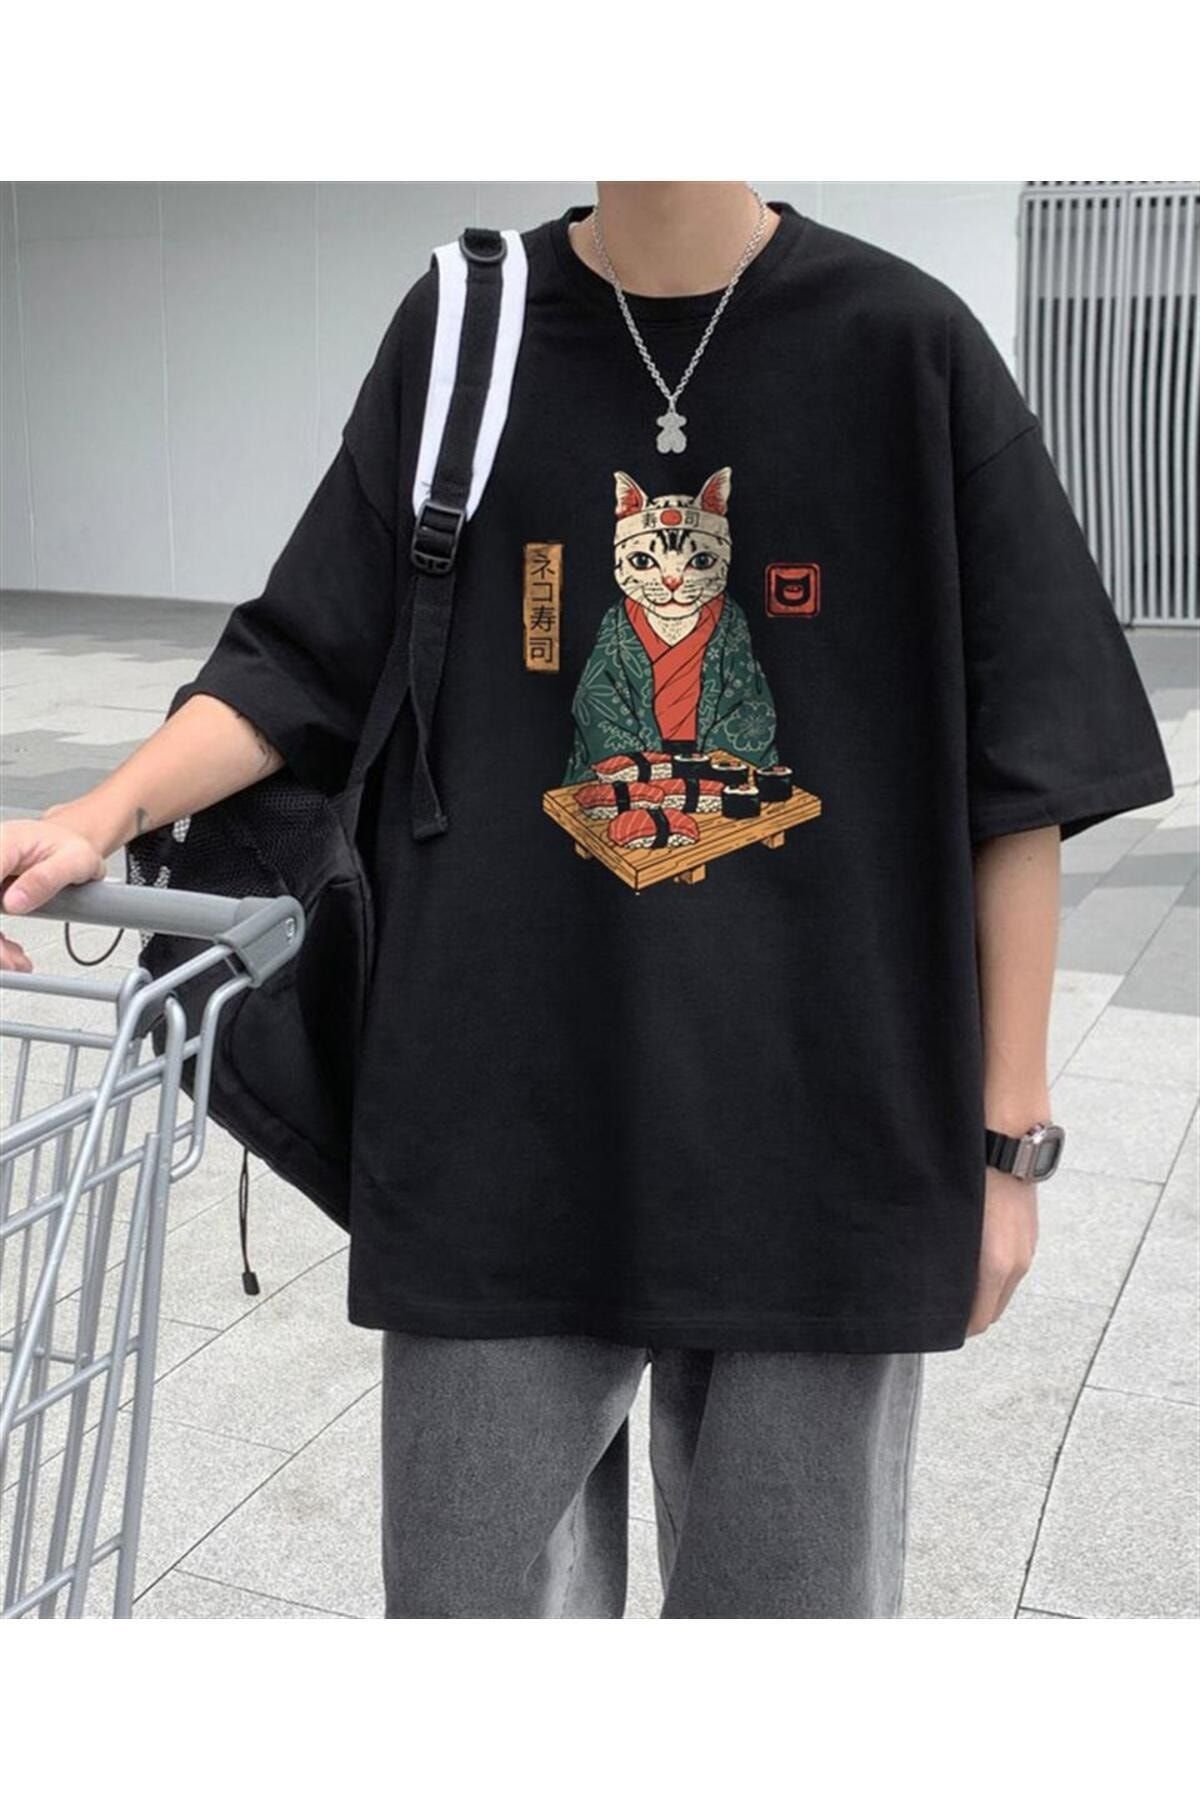 Touz zolid wear Sushi Cat Siyah Unisex Oversize T-shirt